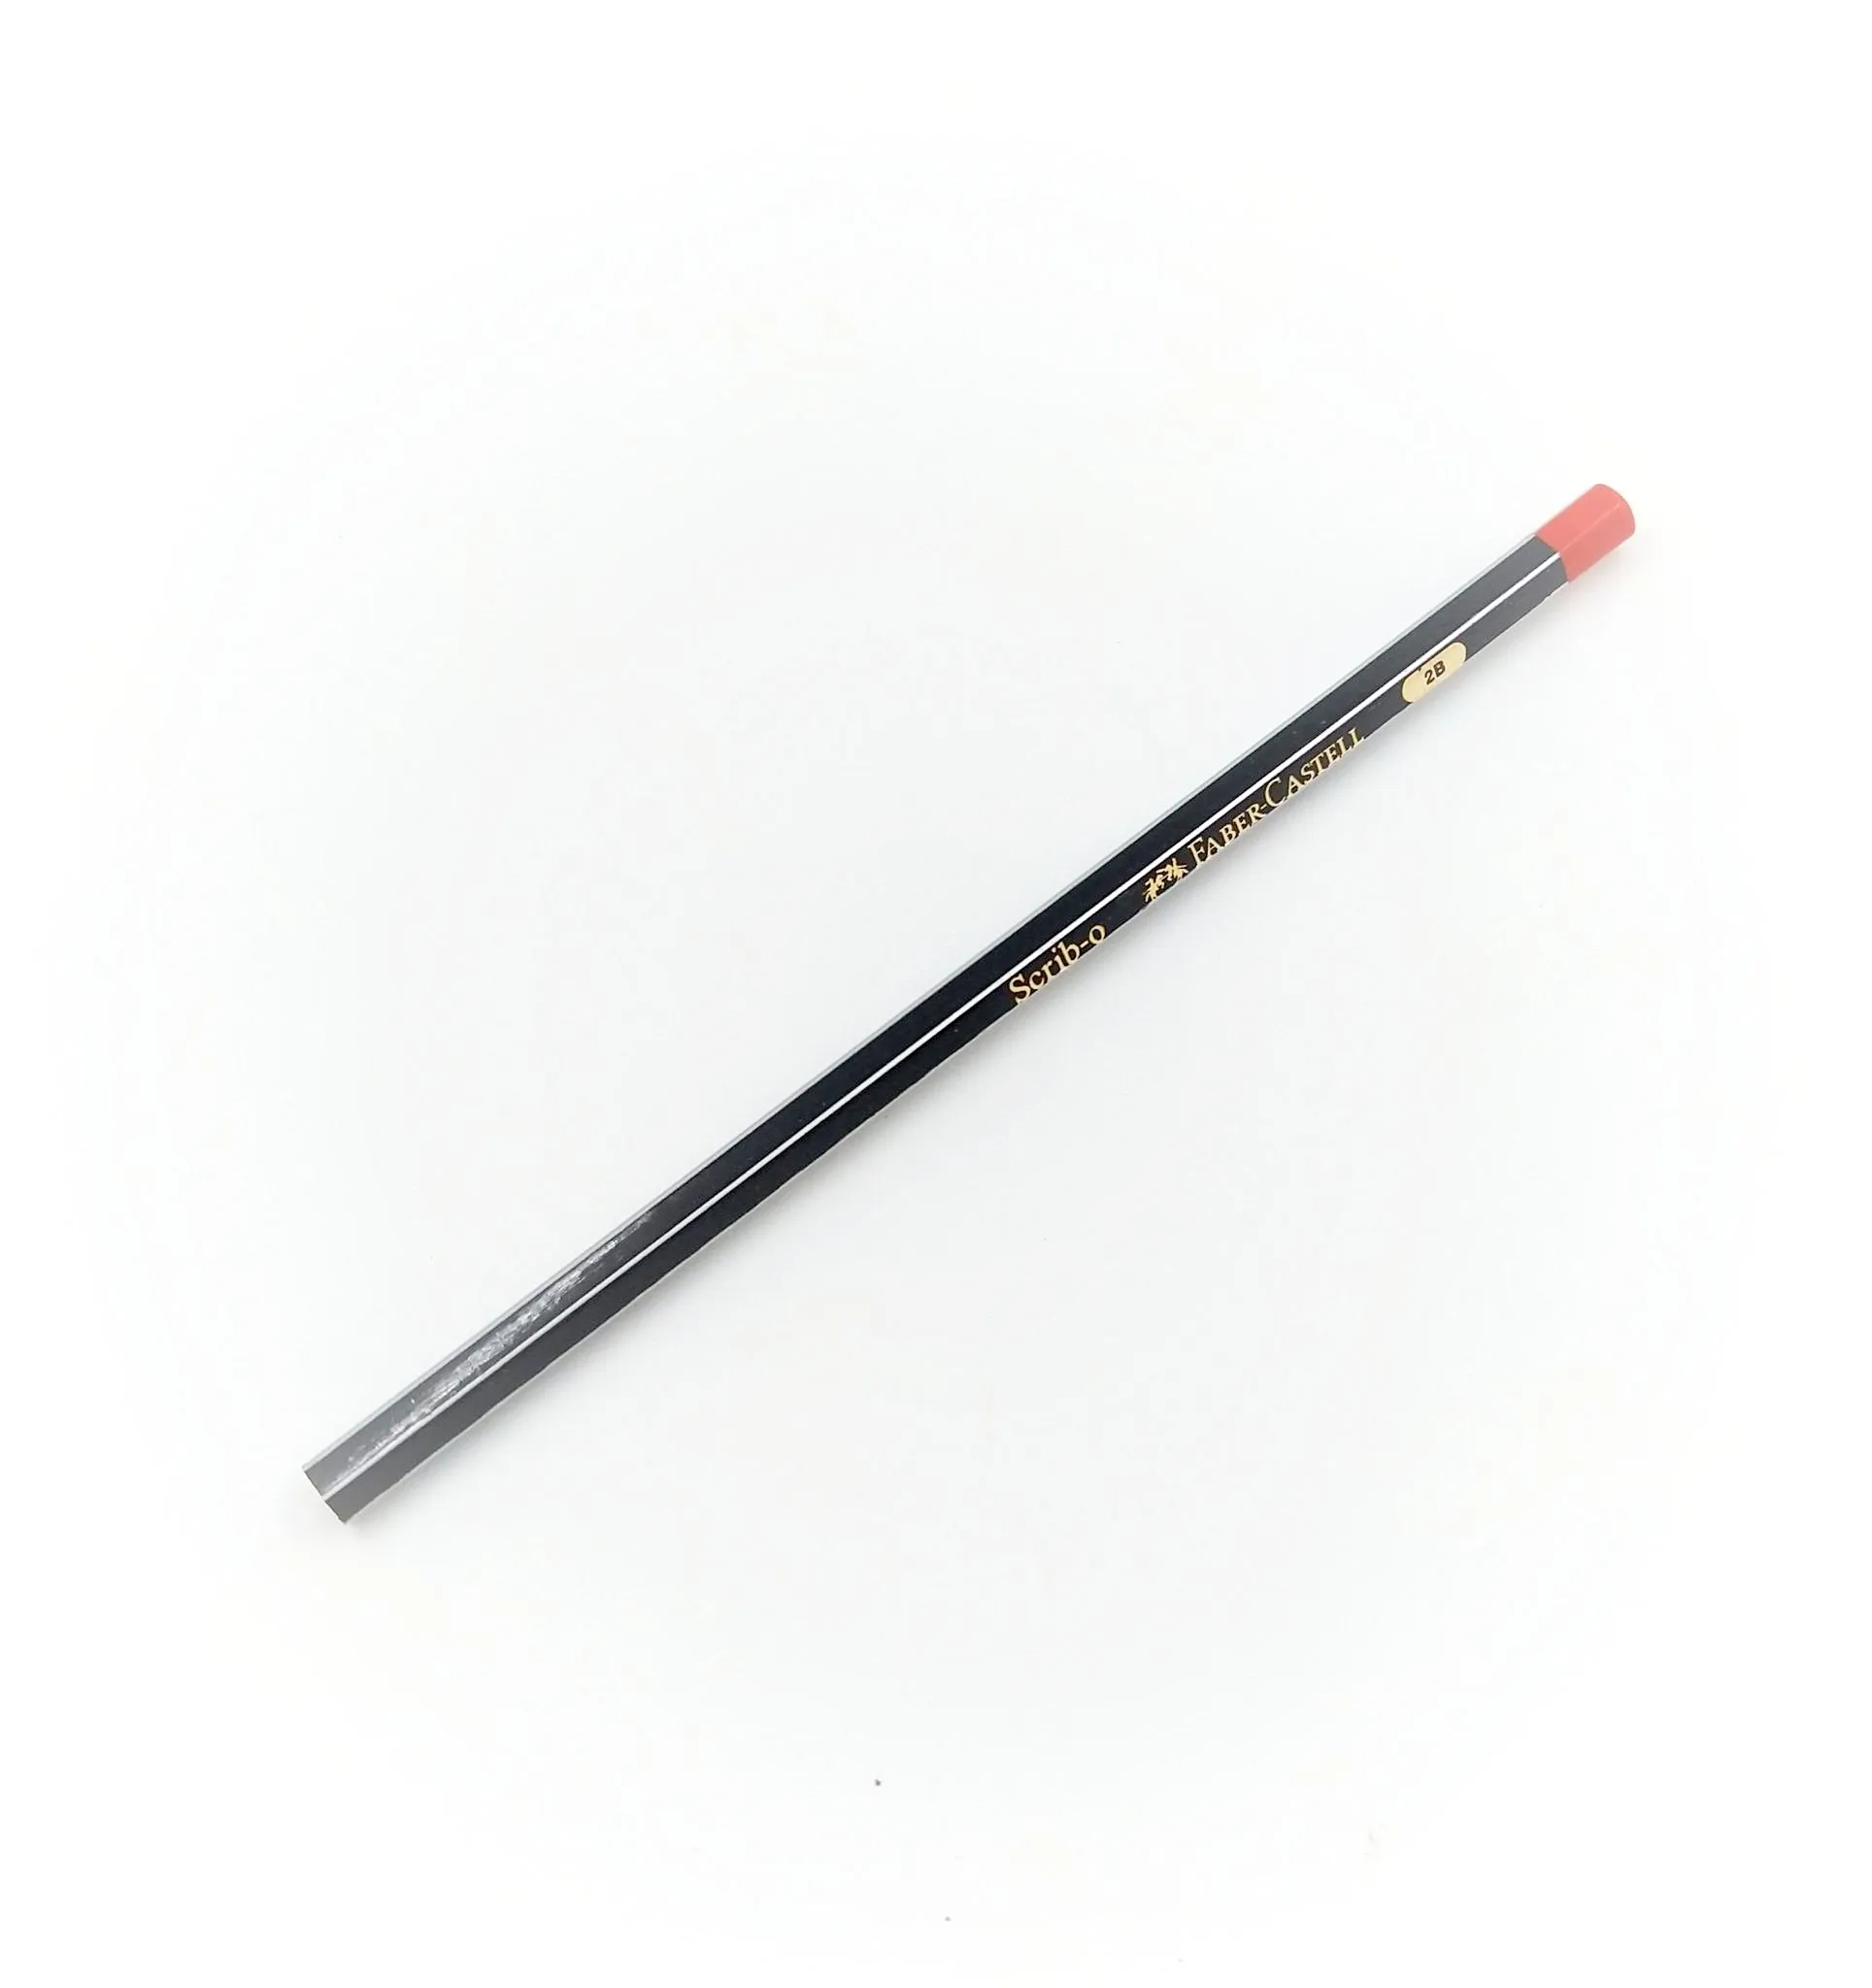 Faber Castell 10 Scrib- O Pencils Hexagonal With 1 Eraser & 1 Sharpener 5 Pack of (10 Pencils) each